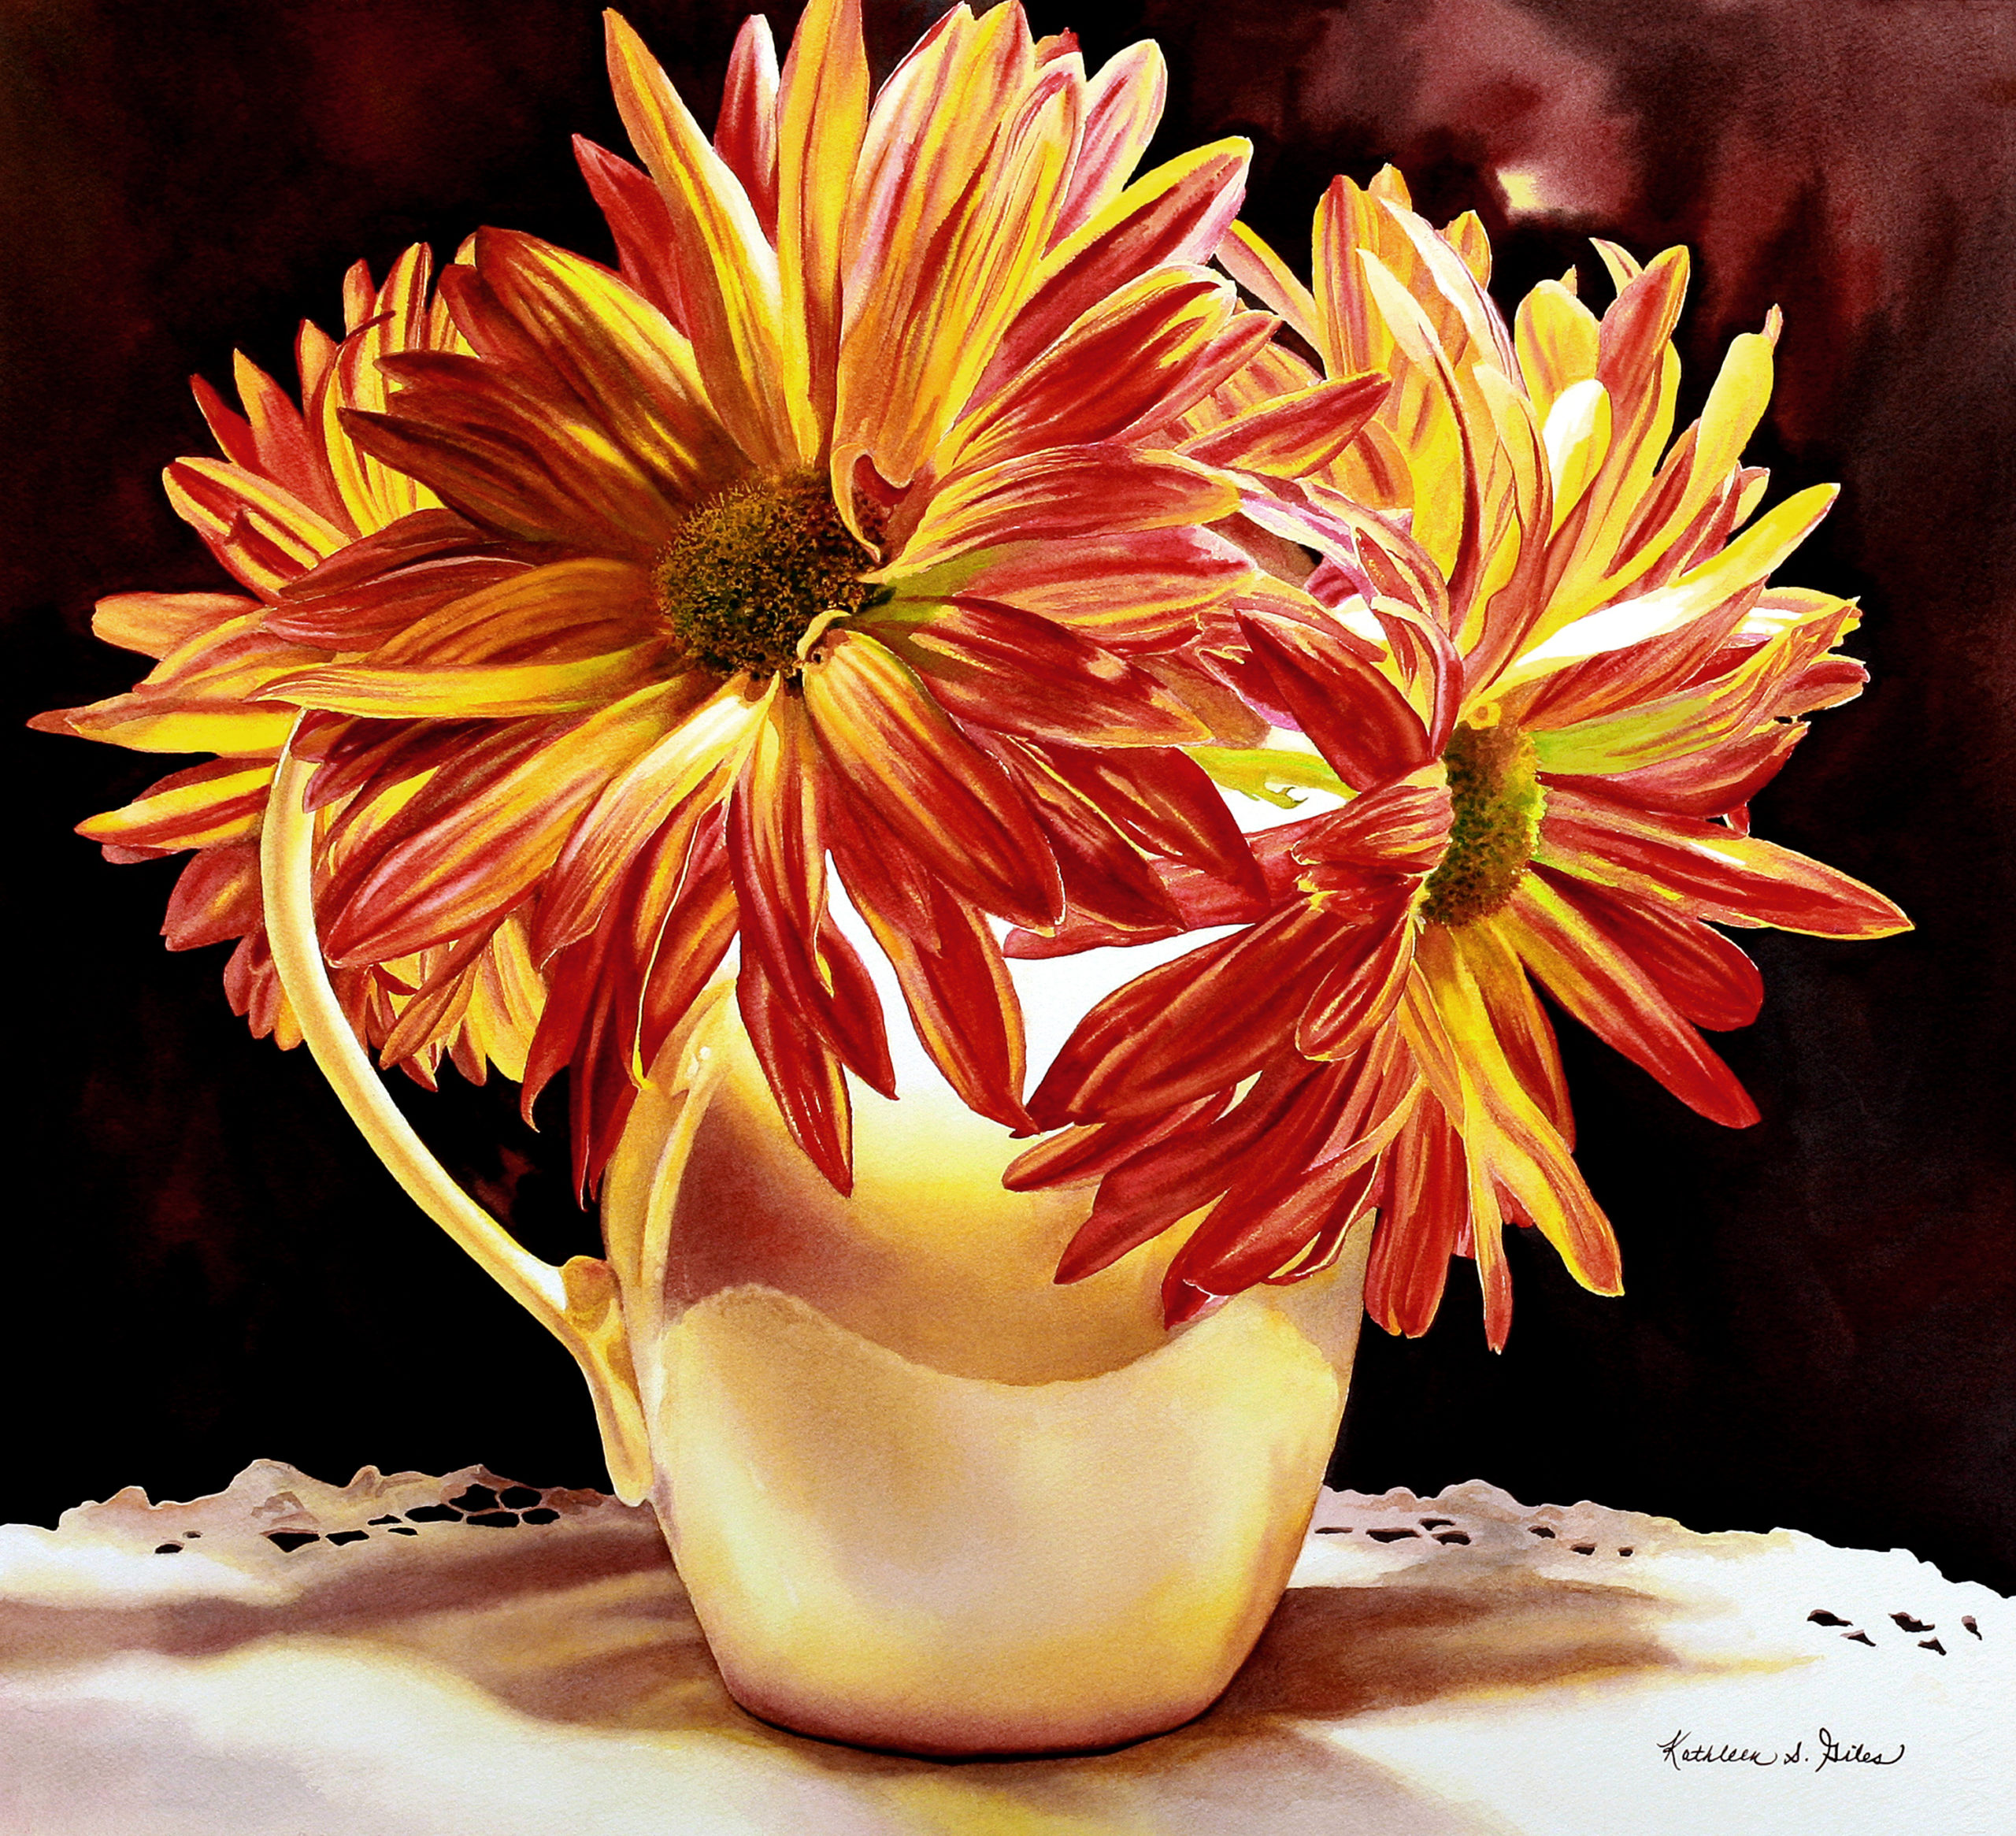 Kathleen Giles, "Vase of Dahlias," watercolor